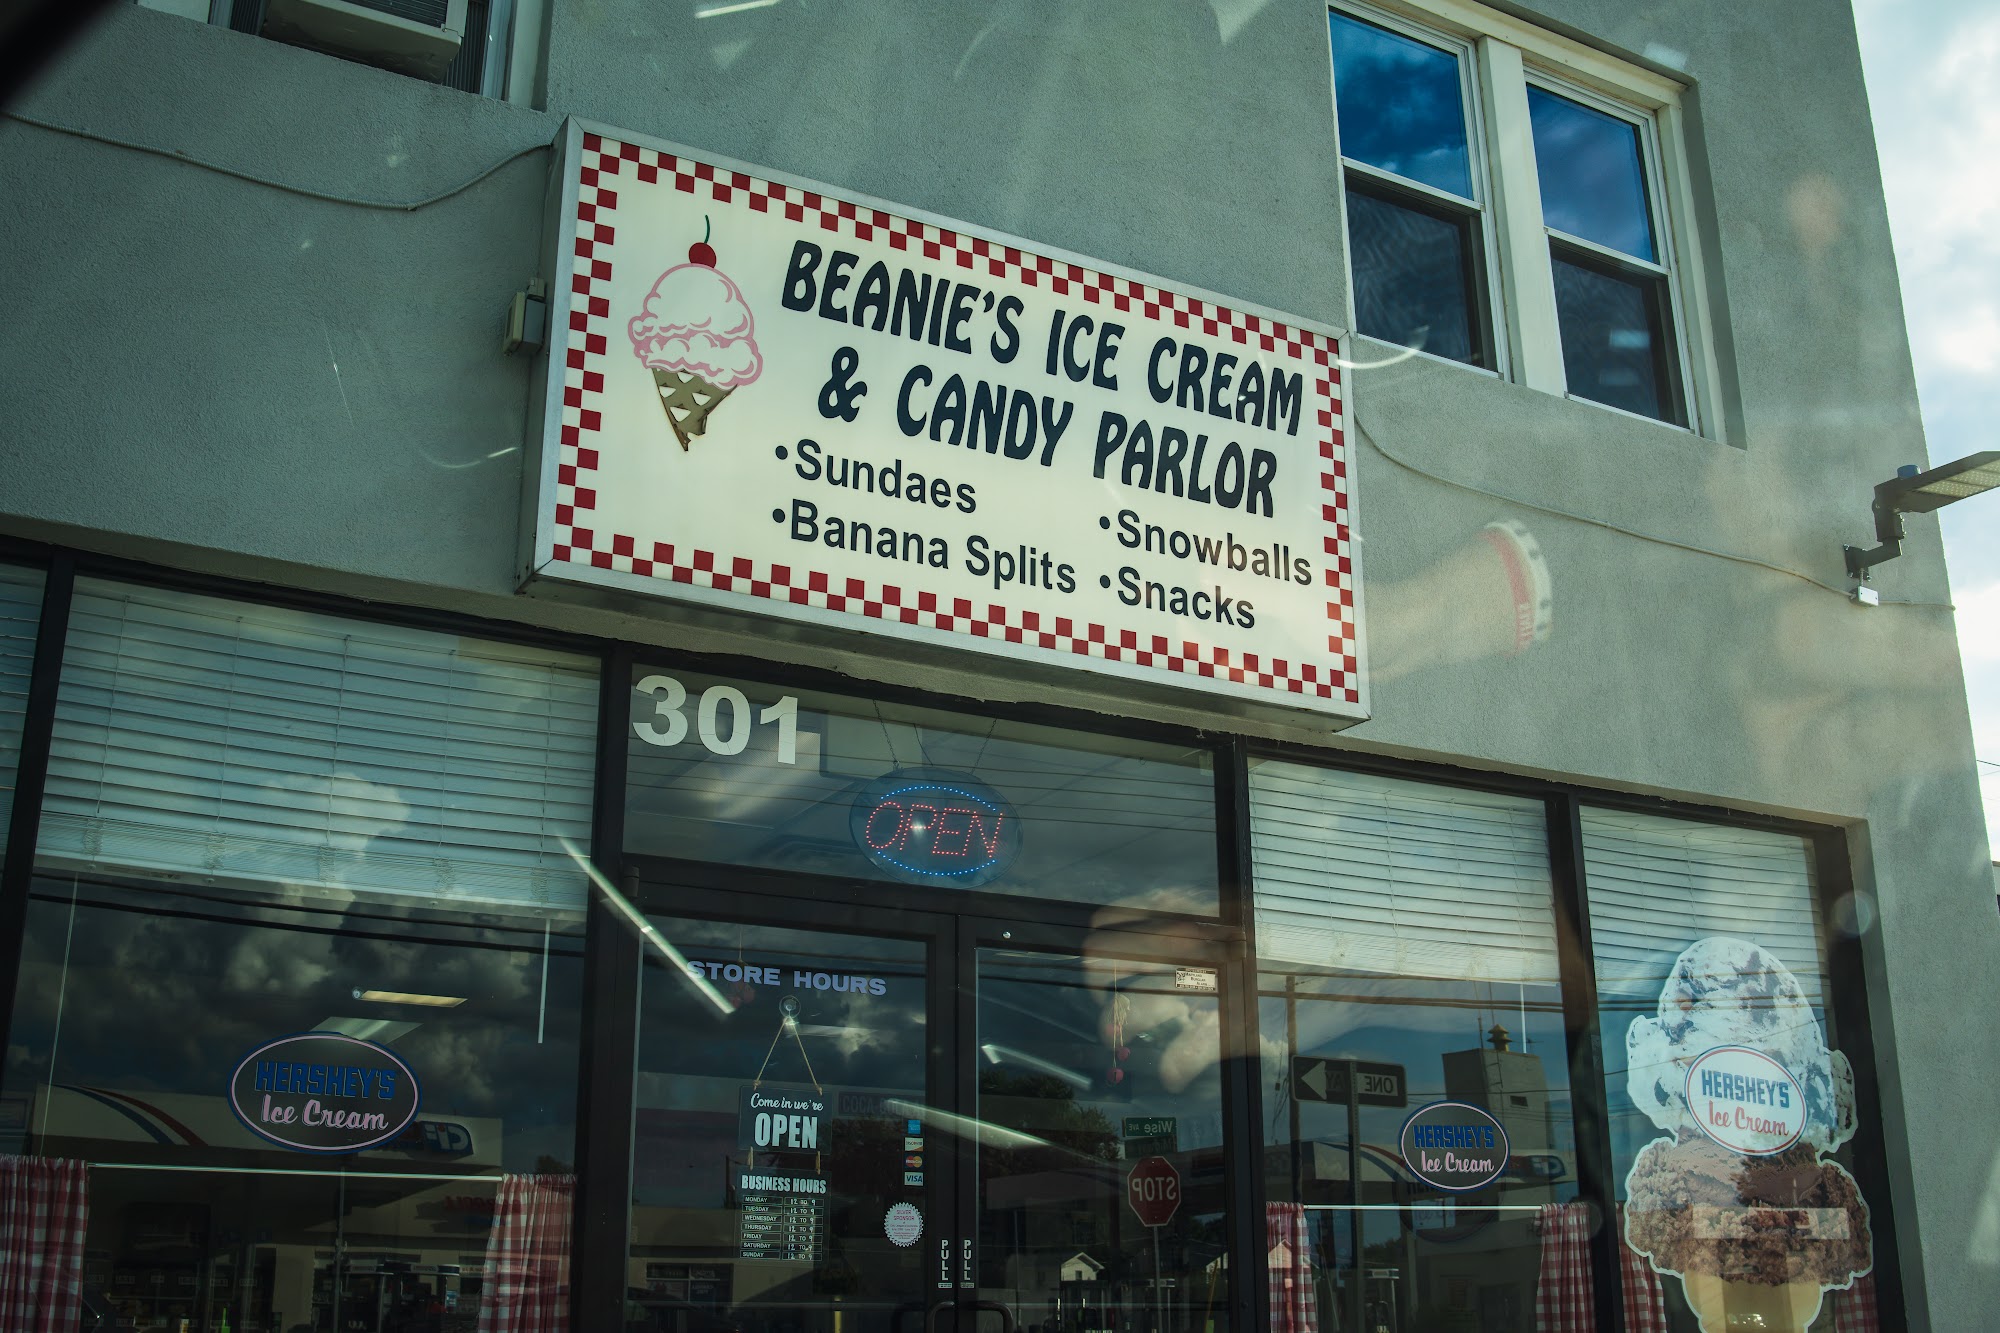 Beanie's Ice Cream-Candy Parlor